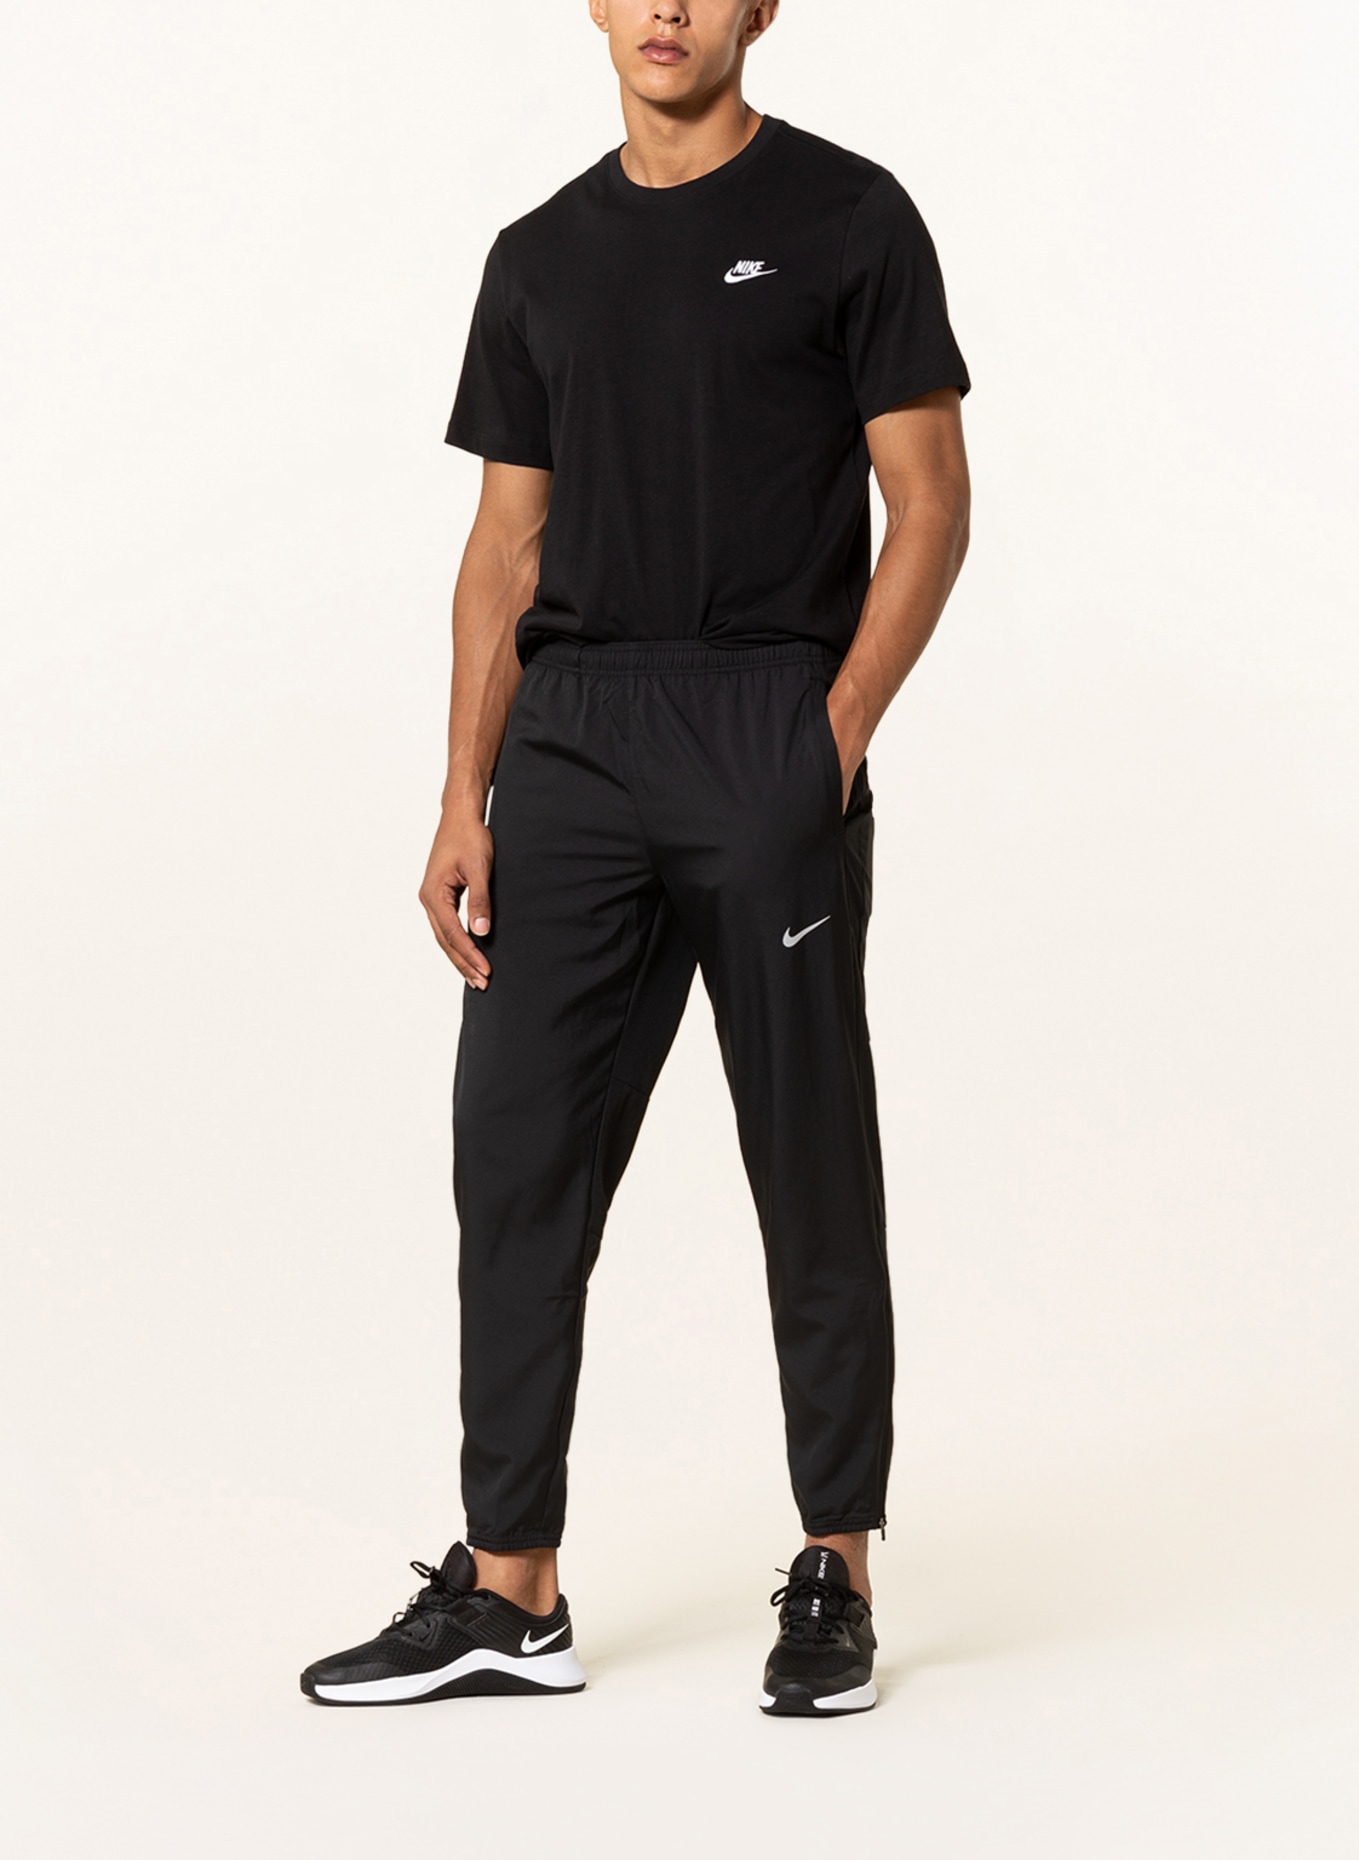 Nike Running pants DRI-FIT CHALLENGER in black